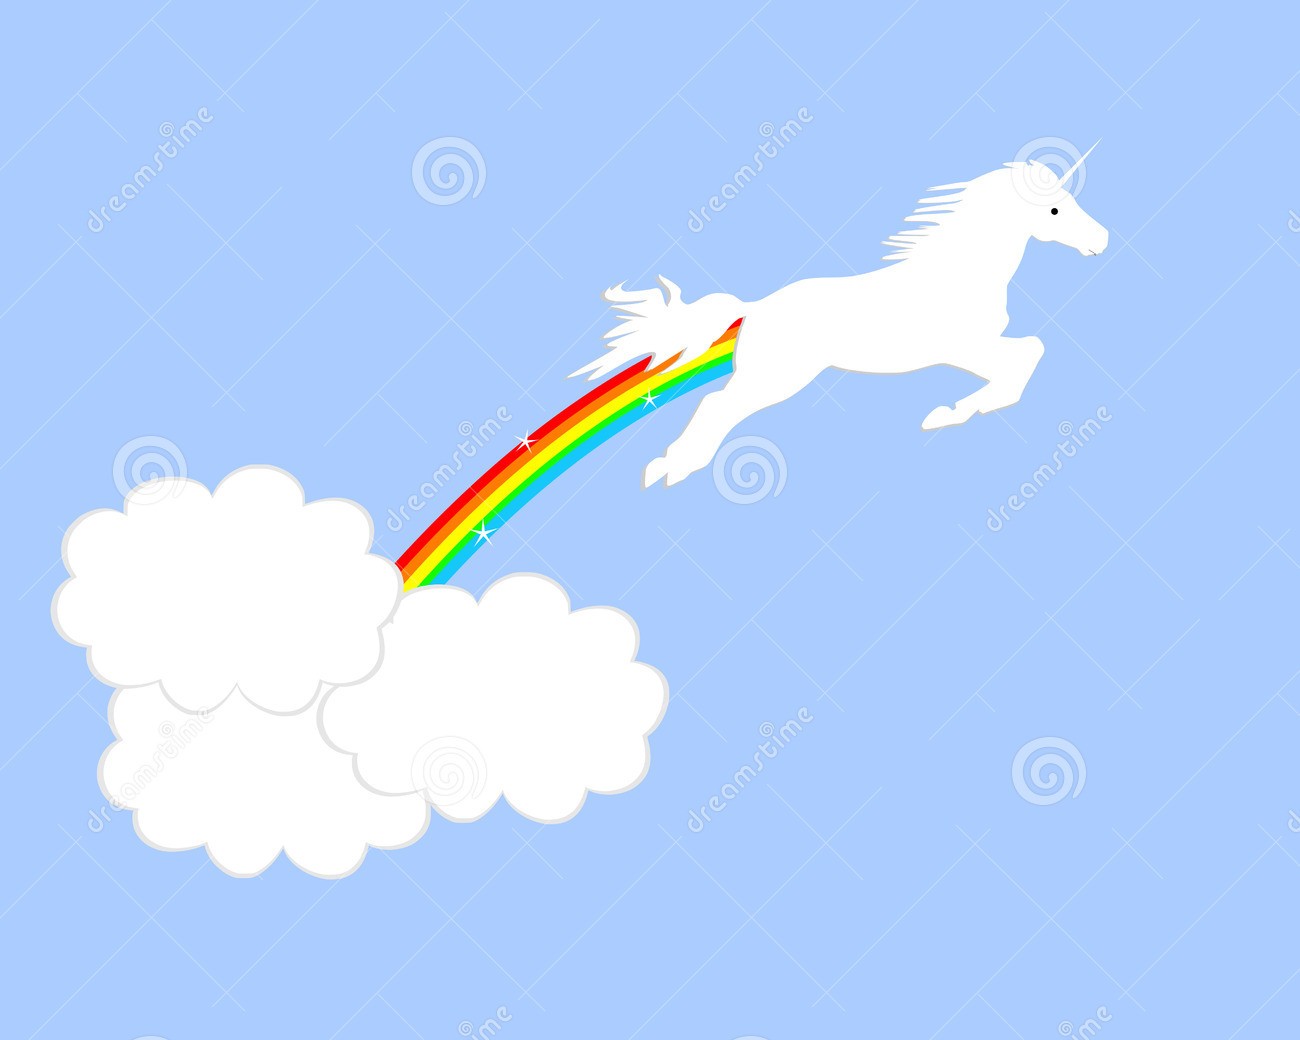 leaping-unicorn-rainbow-clouds-31146542-e1384780362586.jpg